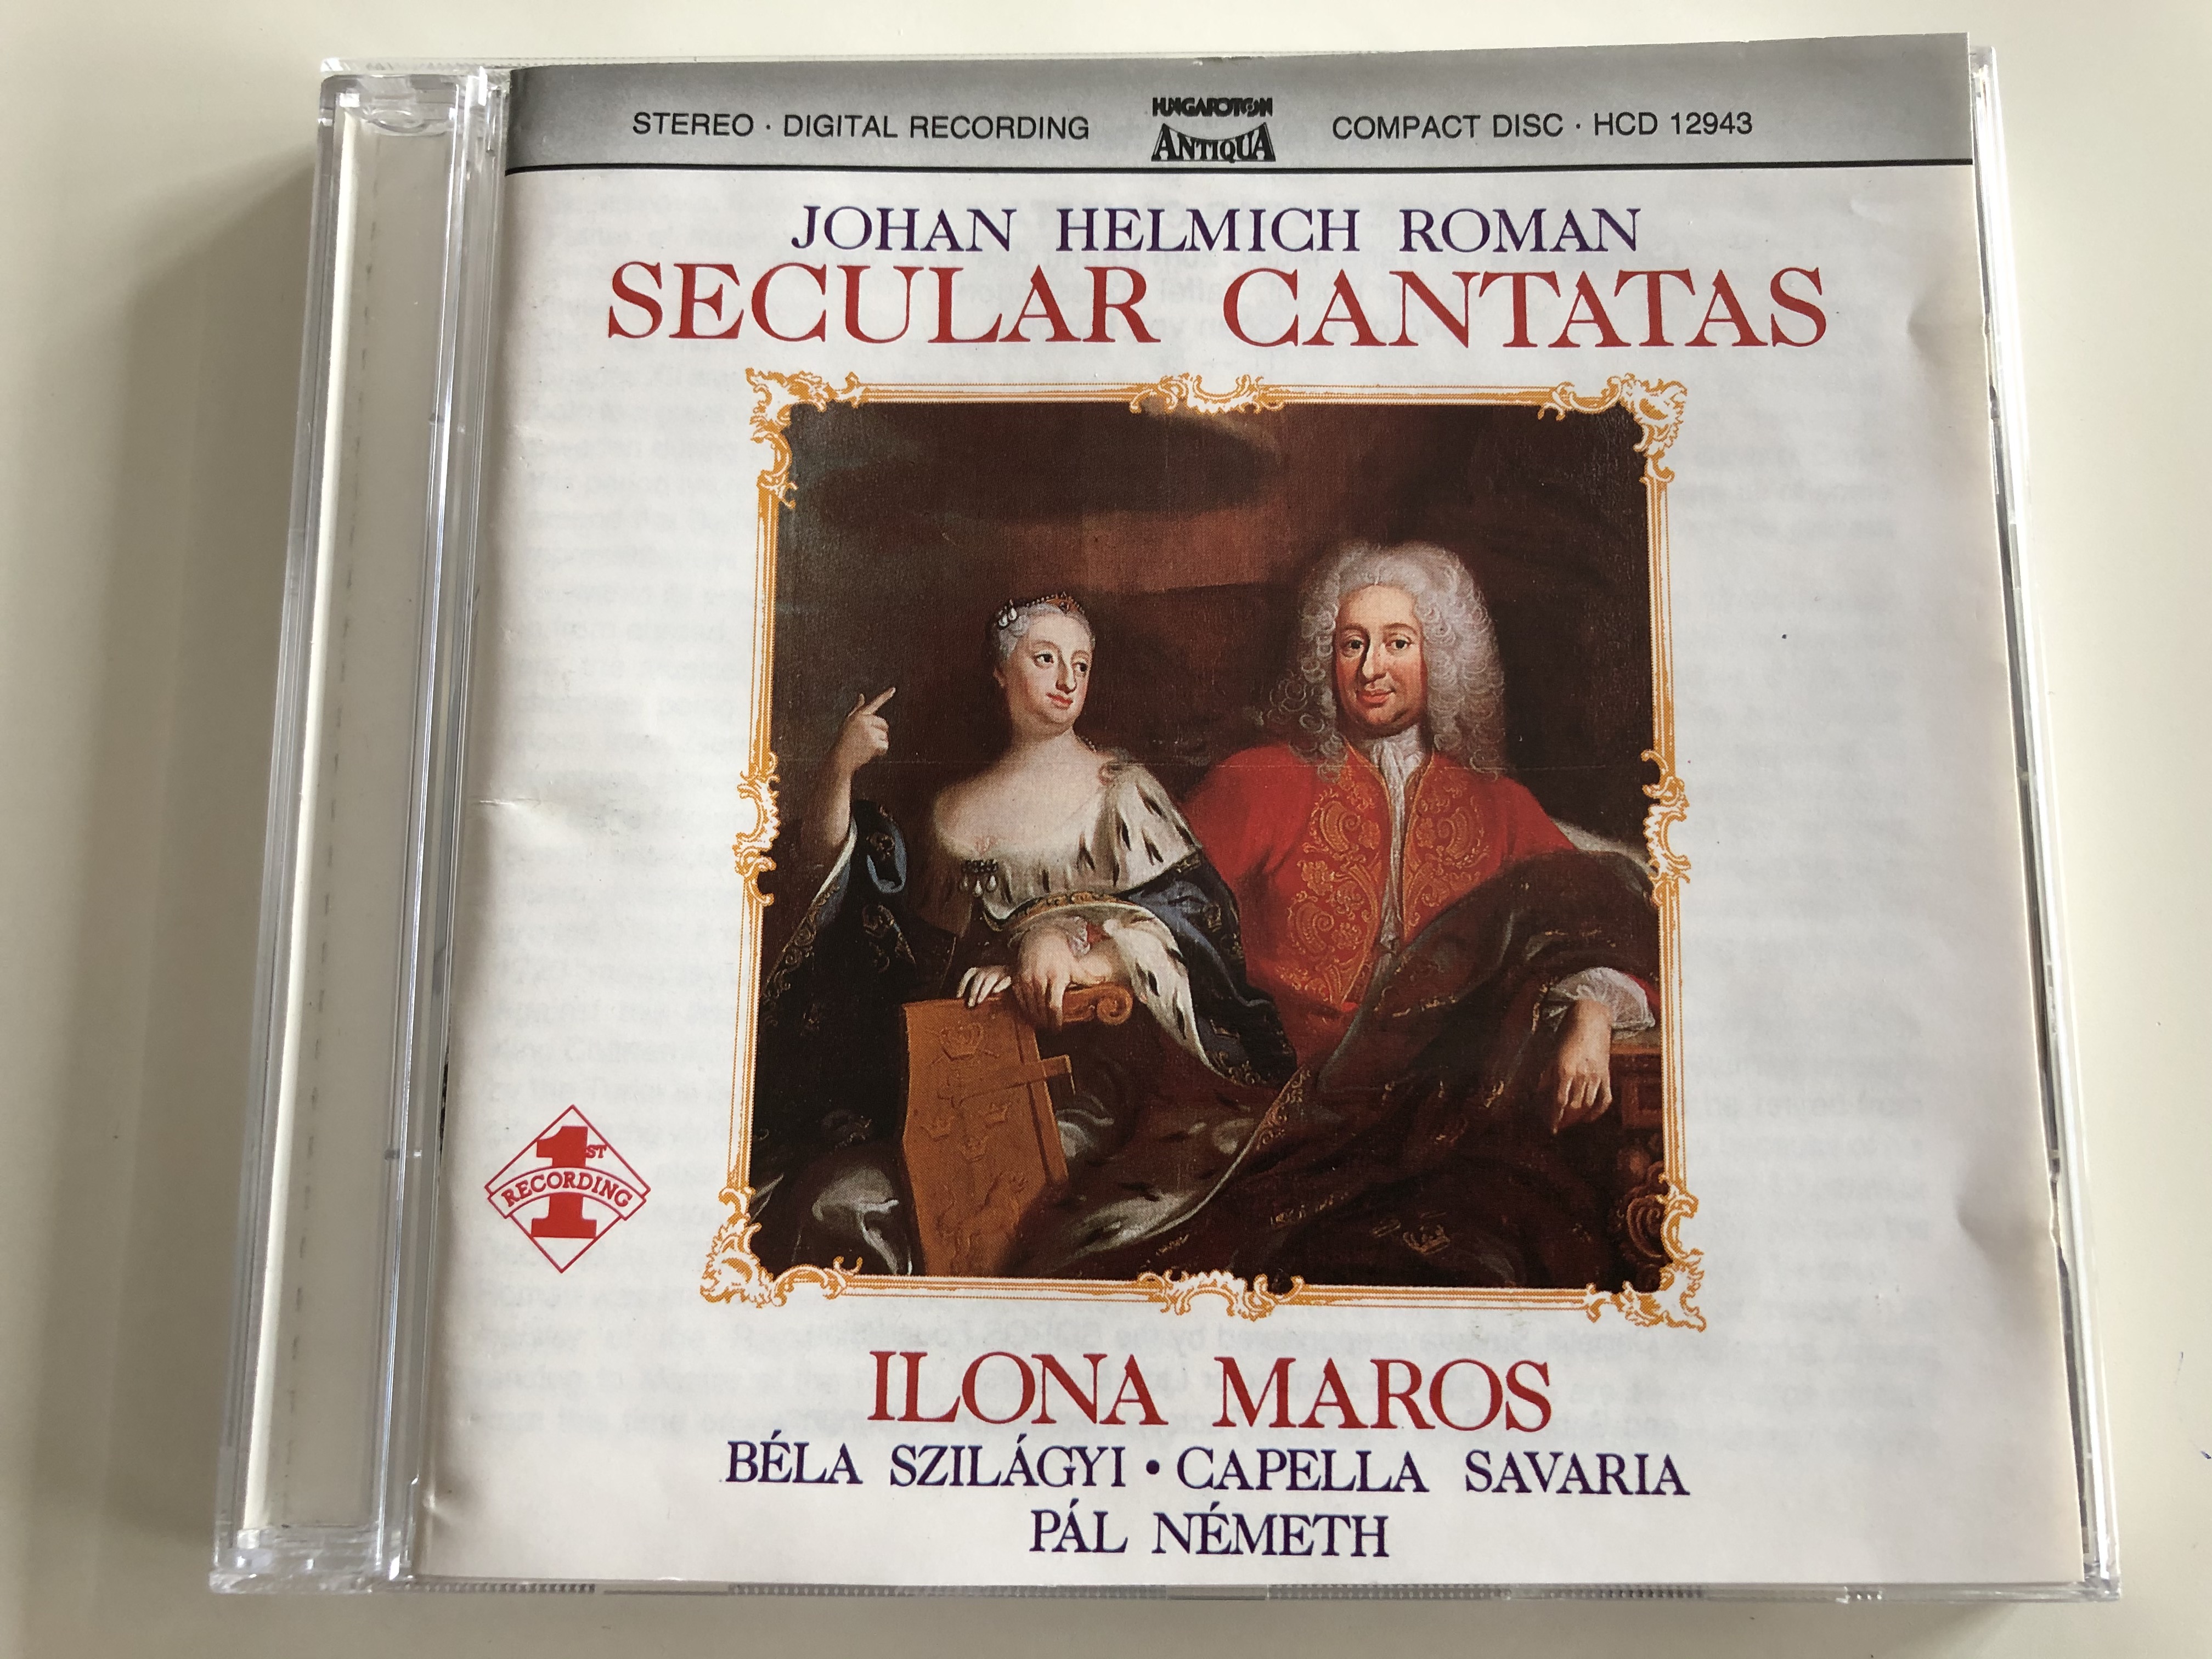 johan-helmich-roman-secular-cantatas-ilona-maros-b-la-szil-gyi-capella-savaria-p-l-n-meth-hungaroton-audio-cd-1988-stereo-hcd-12943-1-.jpg